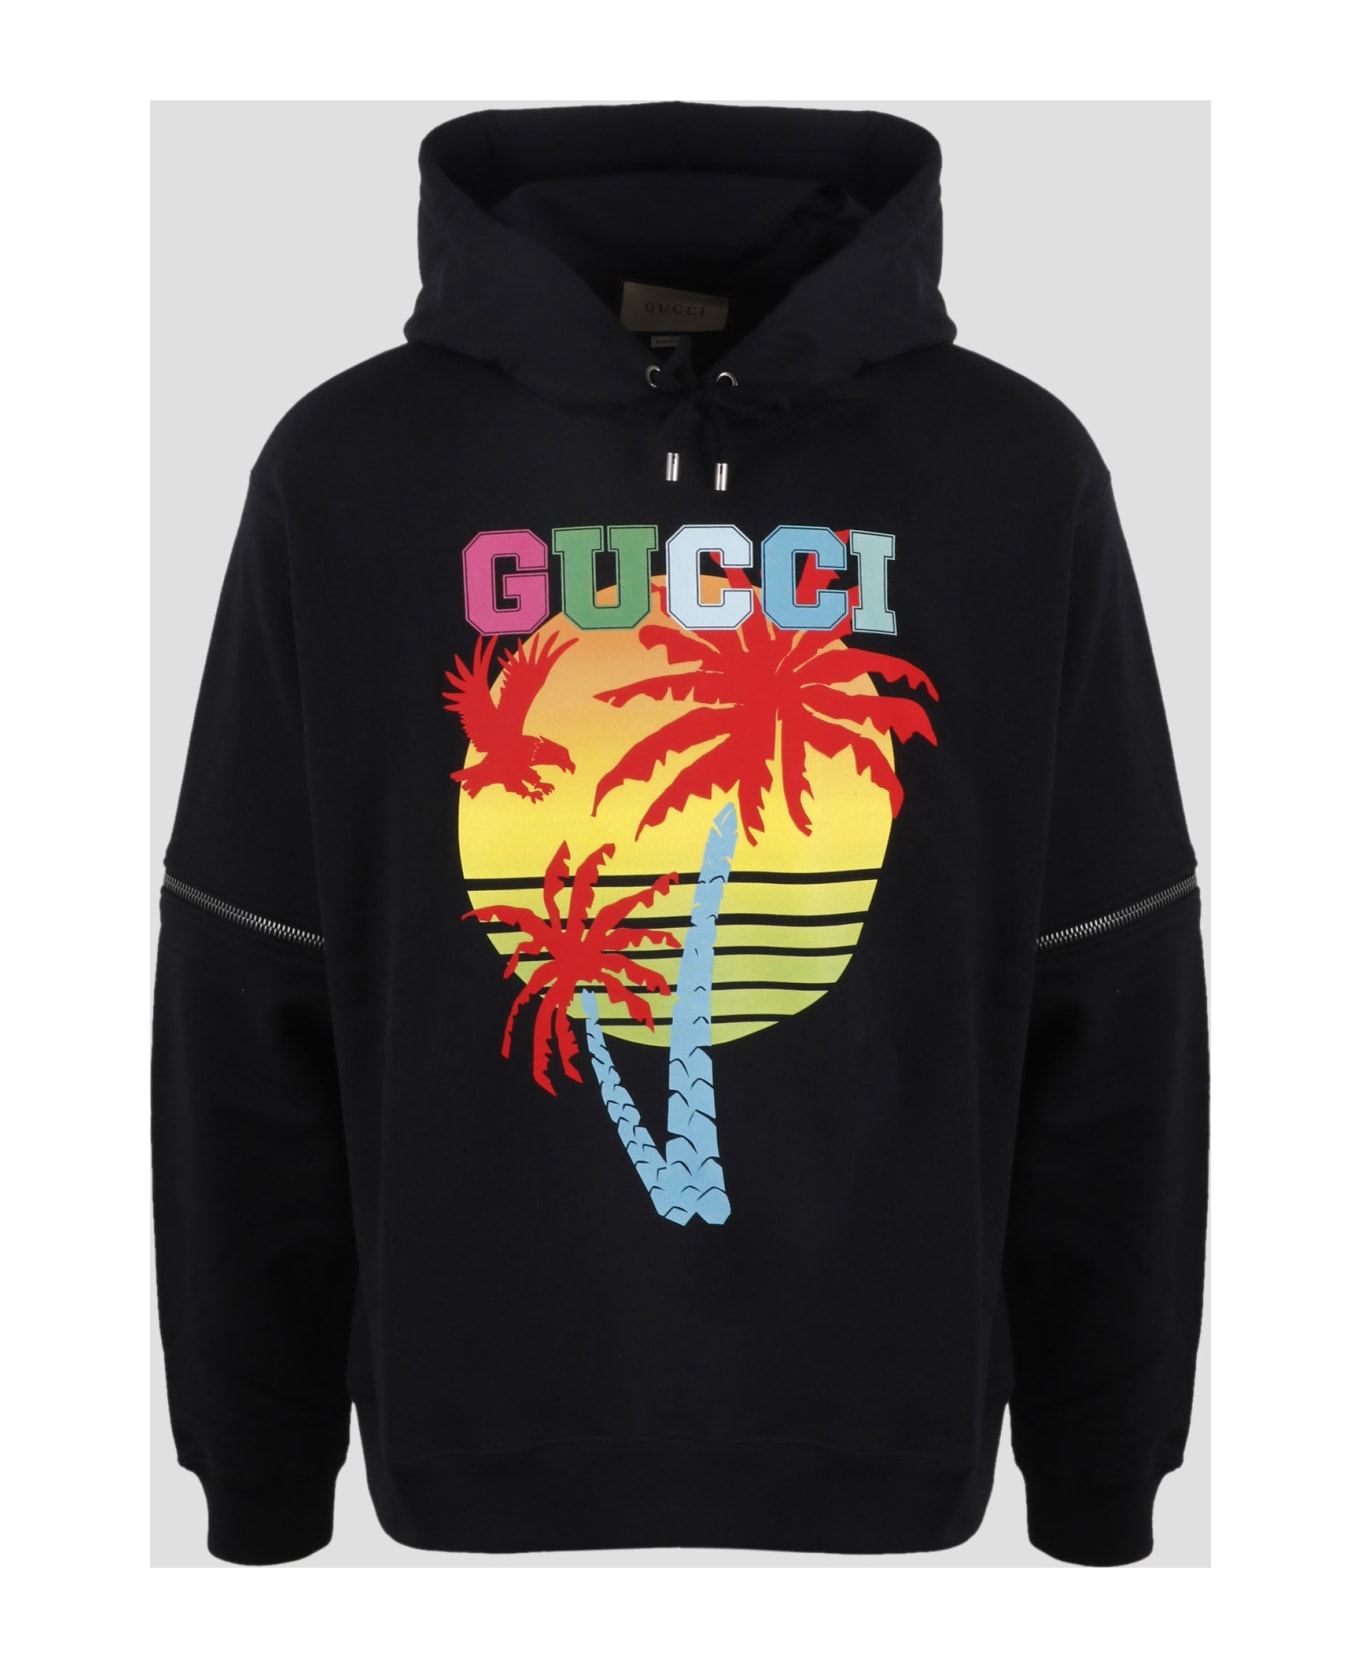 Gucci Sunset Hoodie - Black